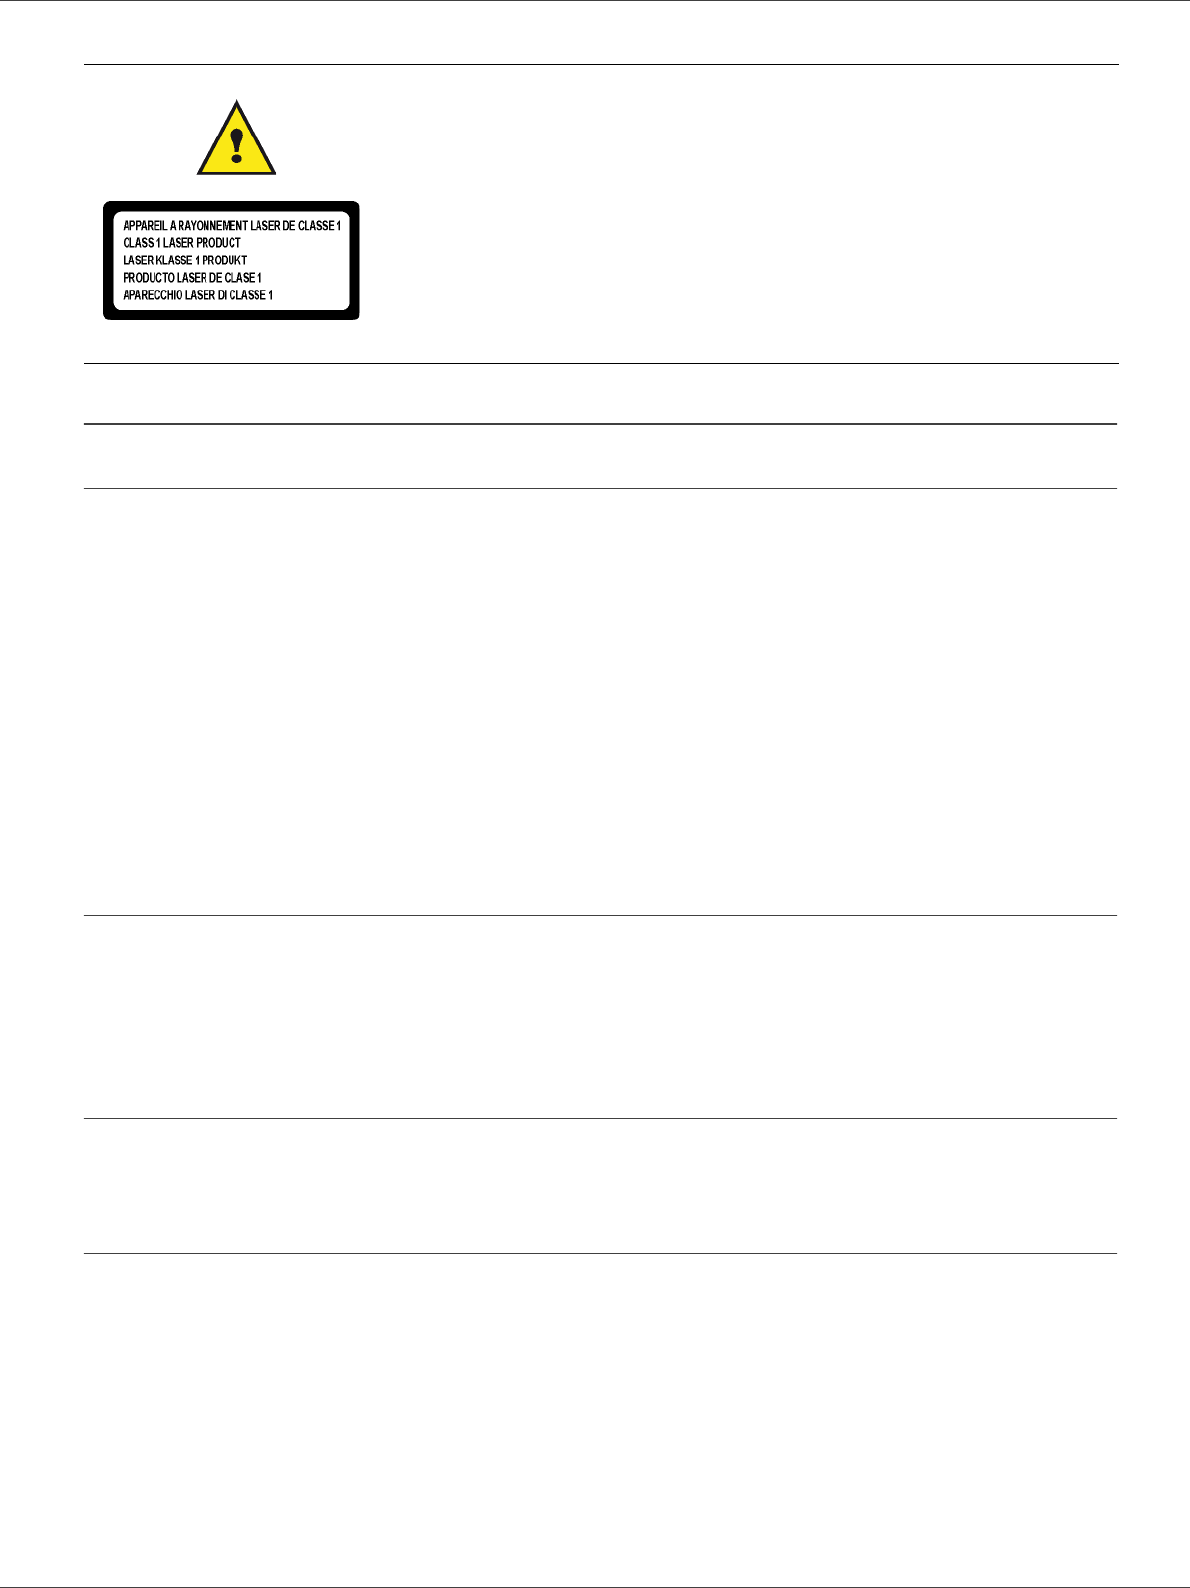 Konica Minolta Pagepro 1480mf Users Manual Pagepro1480mf 1490mf Sig 1 1